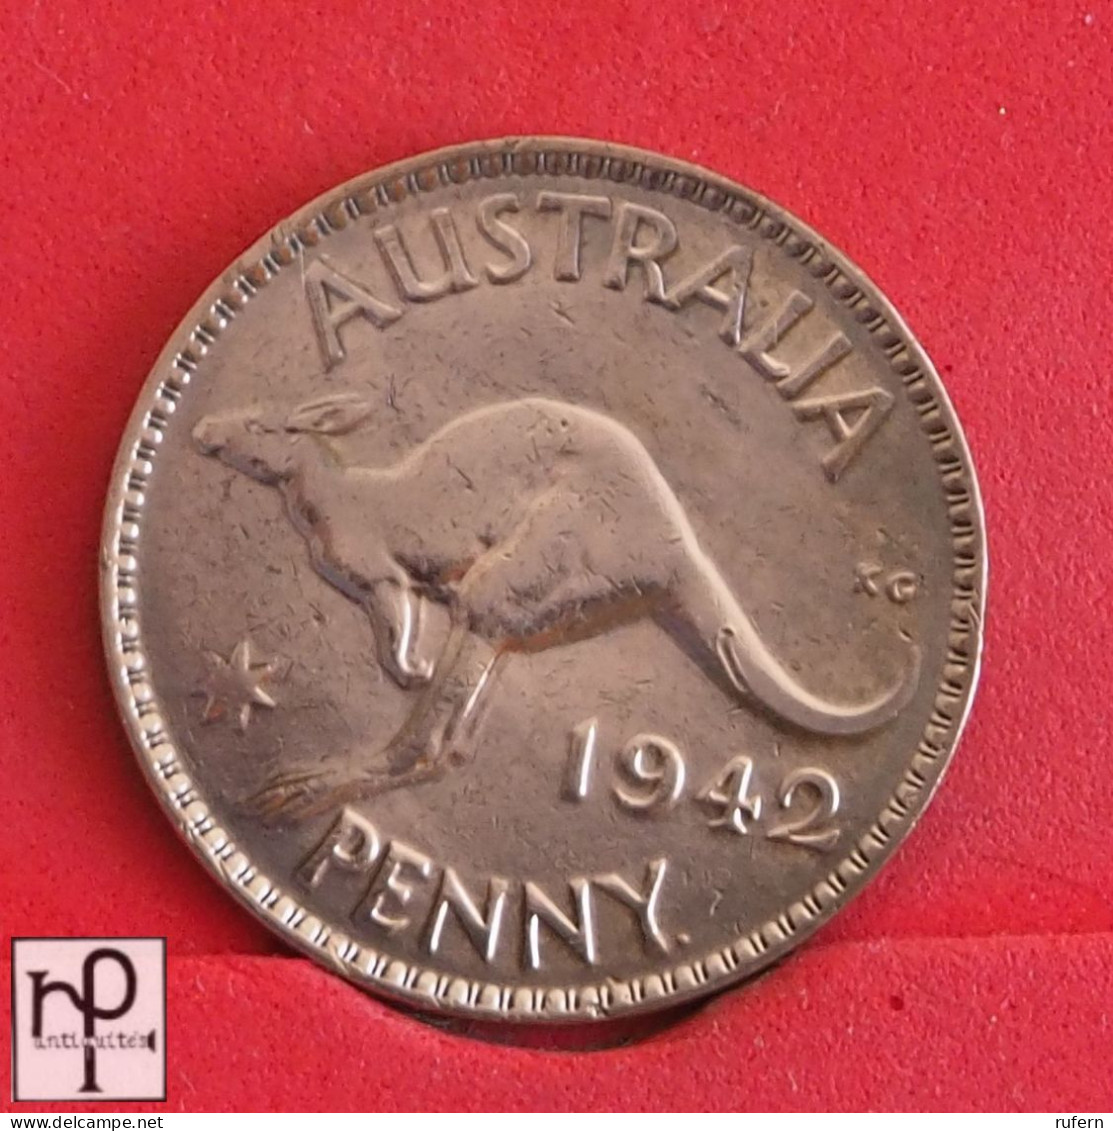 AUSTRALIA 1 PENNY 1942 -    KM# 36 - (Nº55337) - Penny